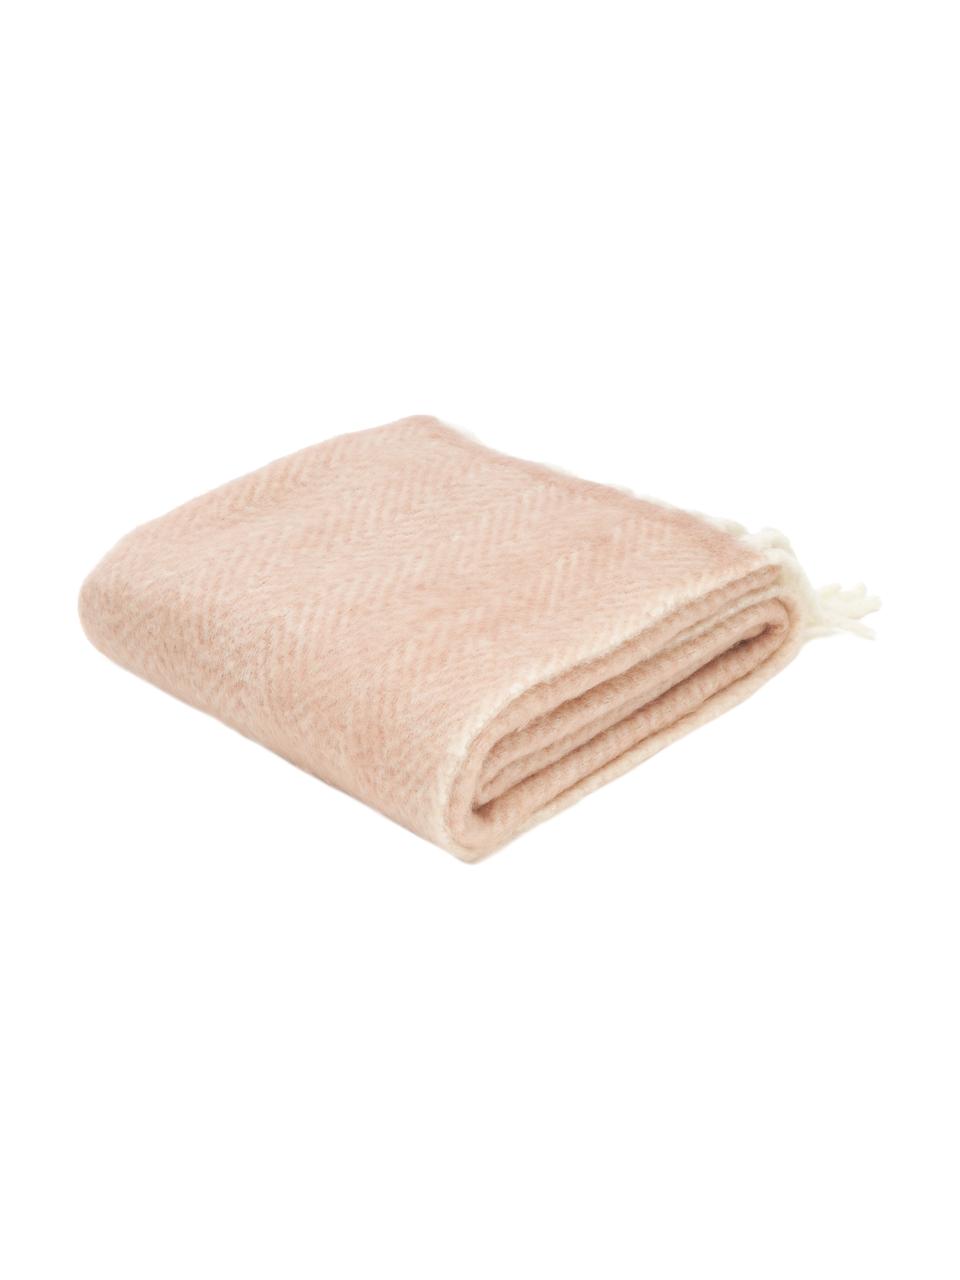 Coperta in lana rosa cipria con frange Mathea, 60% lana, 25% acrilico, 15% nylon, Rosa cipra, Lung. 170 x Larg. 130 cm